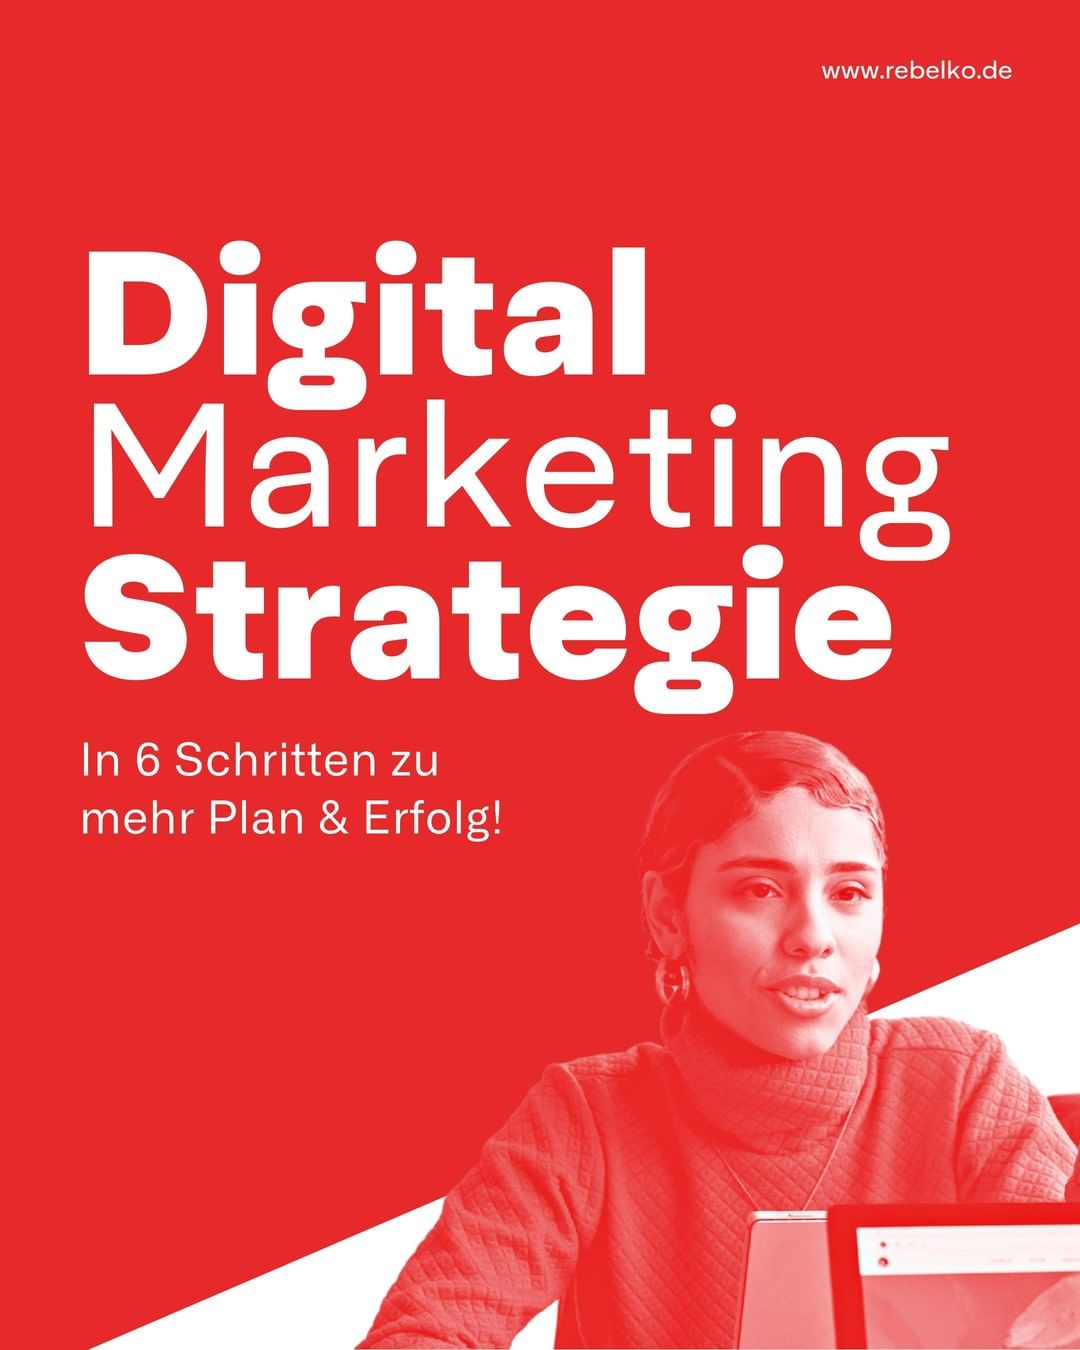 digital marketing strategie REBELKO Agentur Aachen Marketing Design Kreativ Strategie Social Media Konzeption Beratung Creatives Digital 01